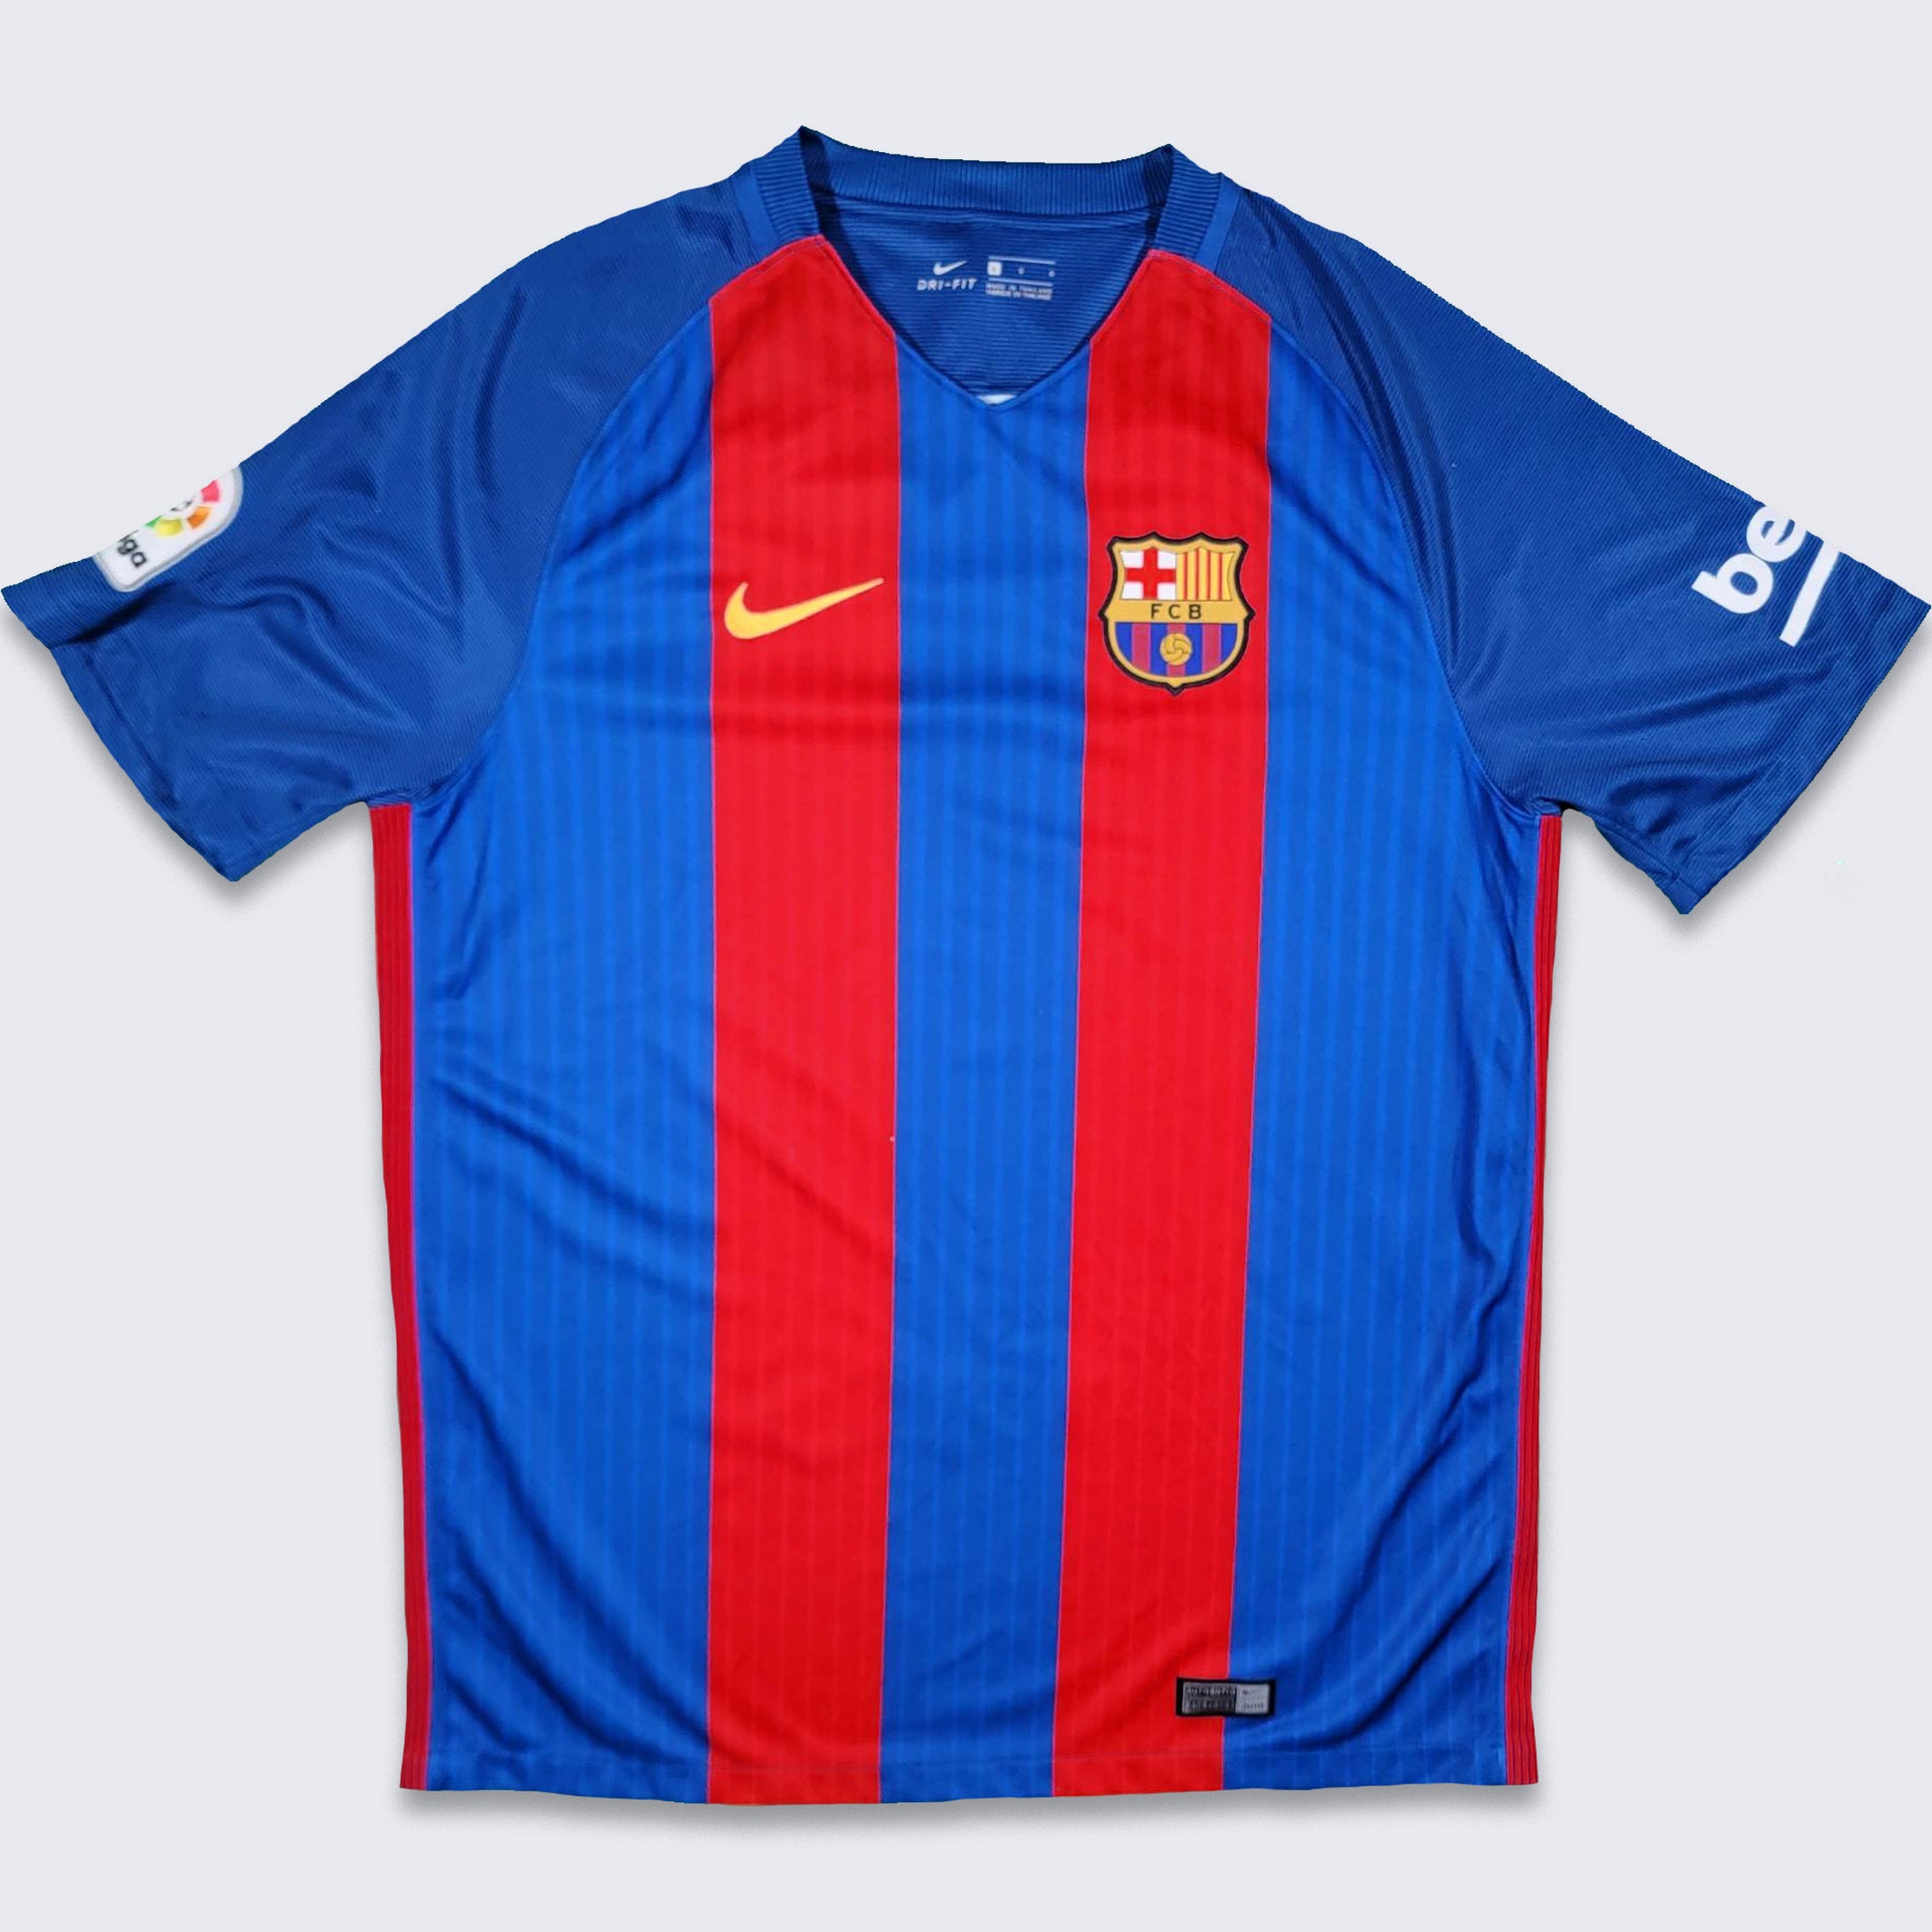 FC Barcelona Nike Soccer Jersey 2016 Home Shirt Blue & -